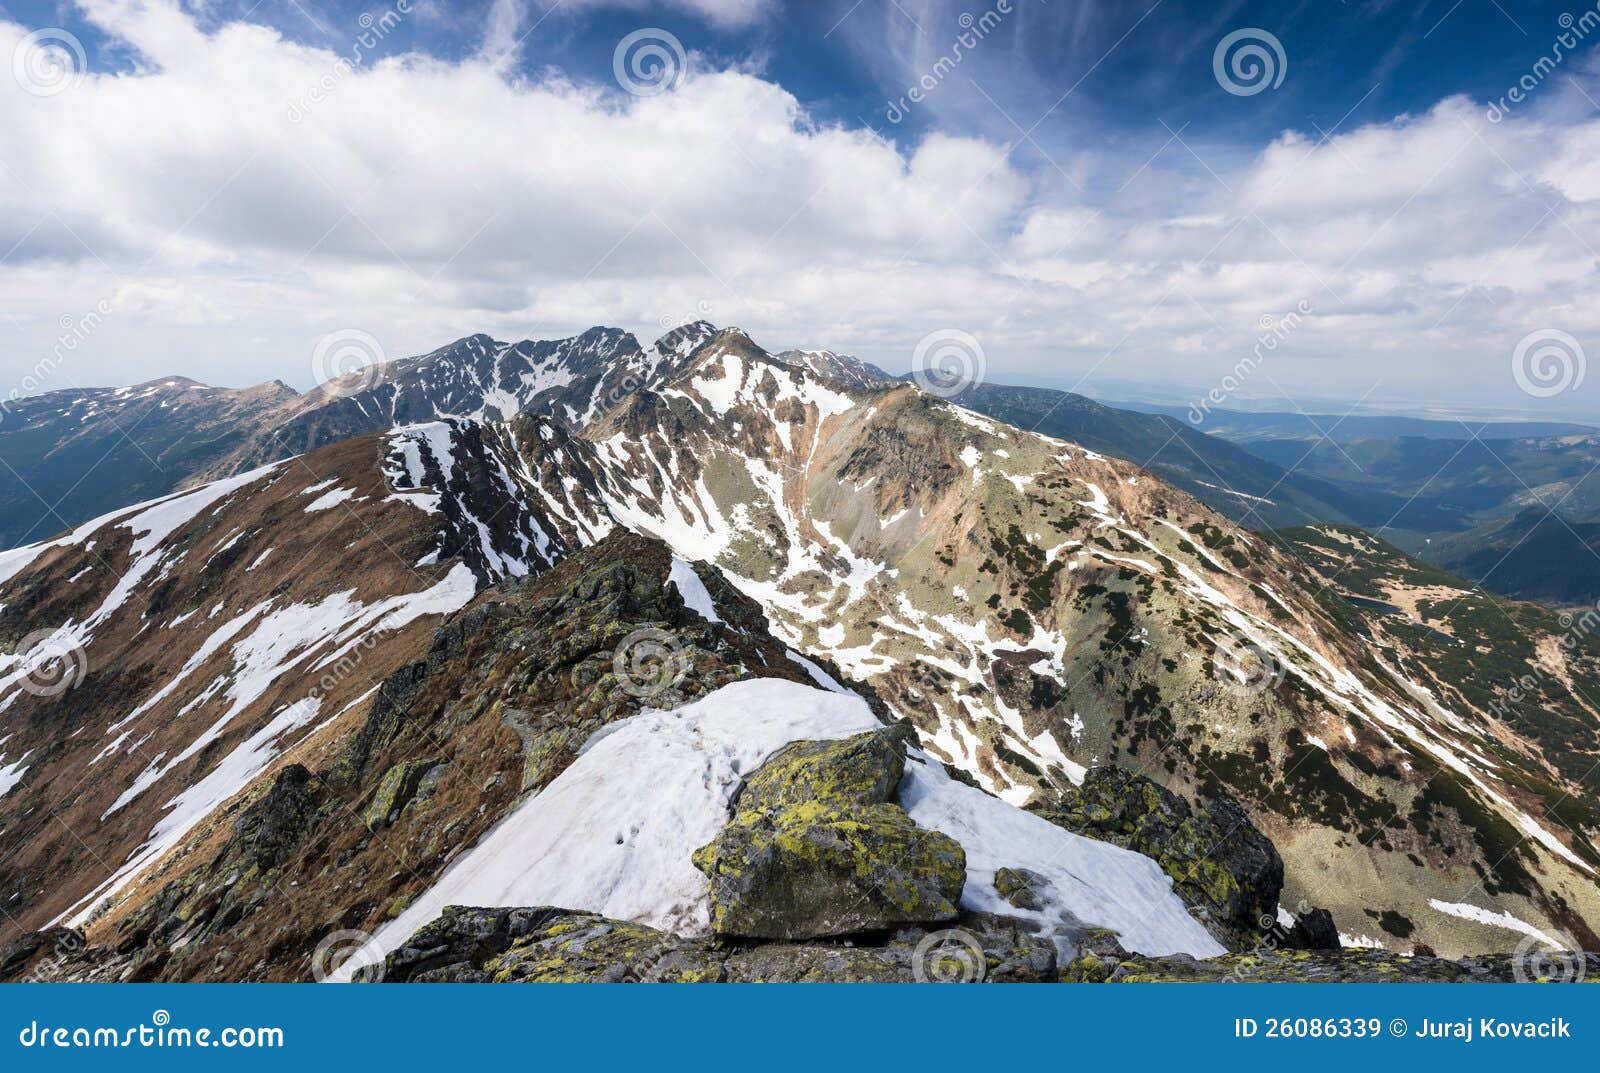 Spring mountains panorama stock image. Image of scenery - 26086339